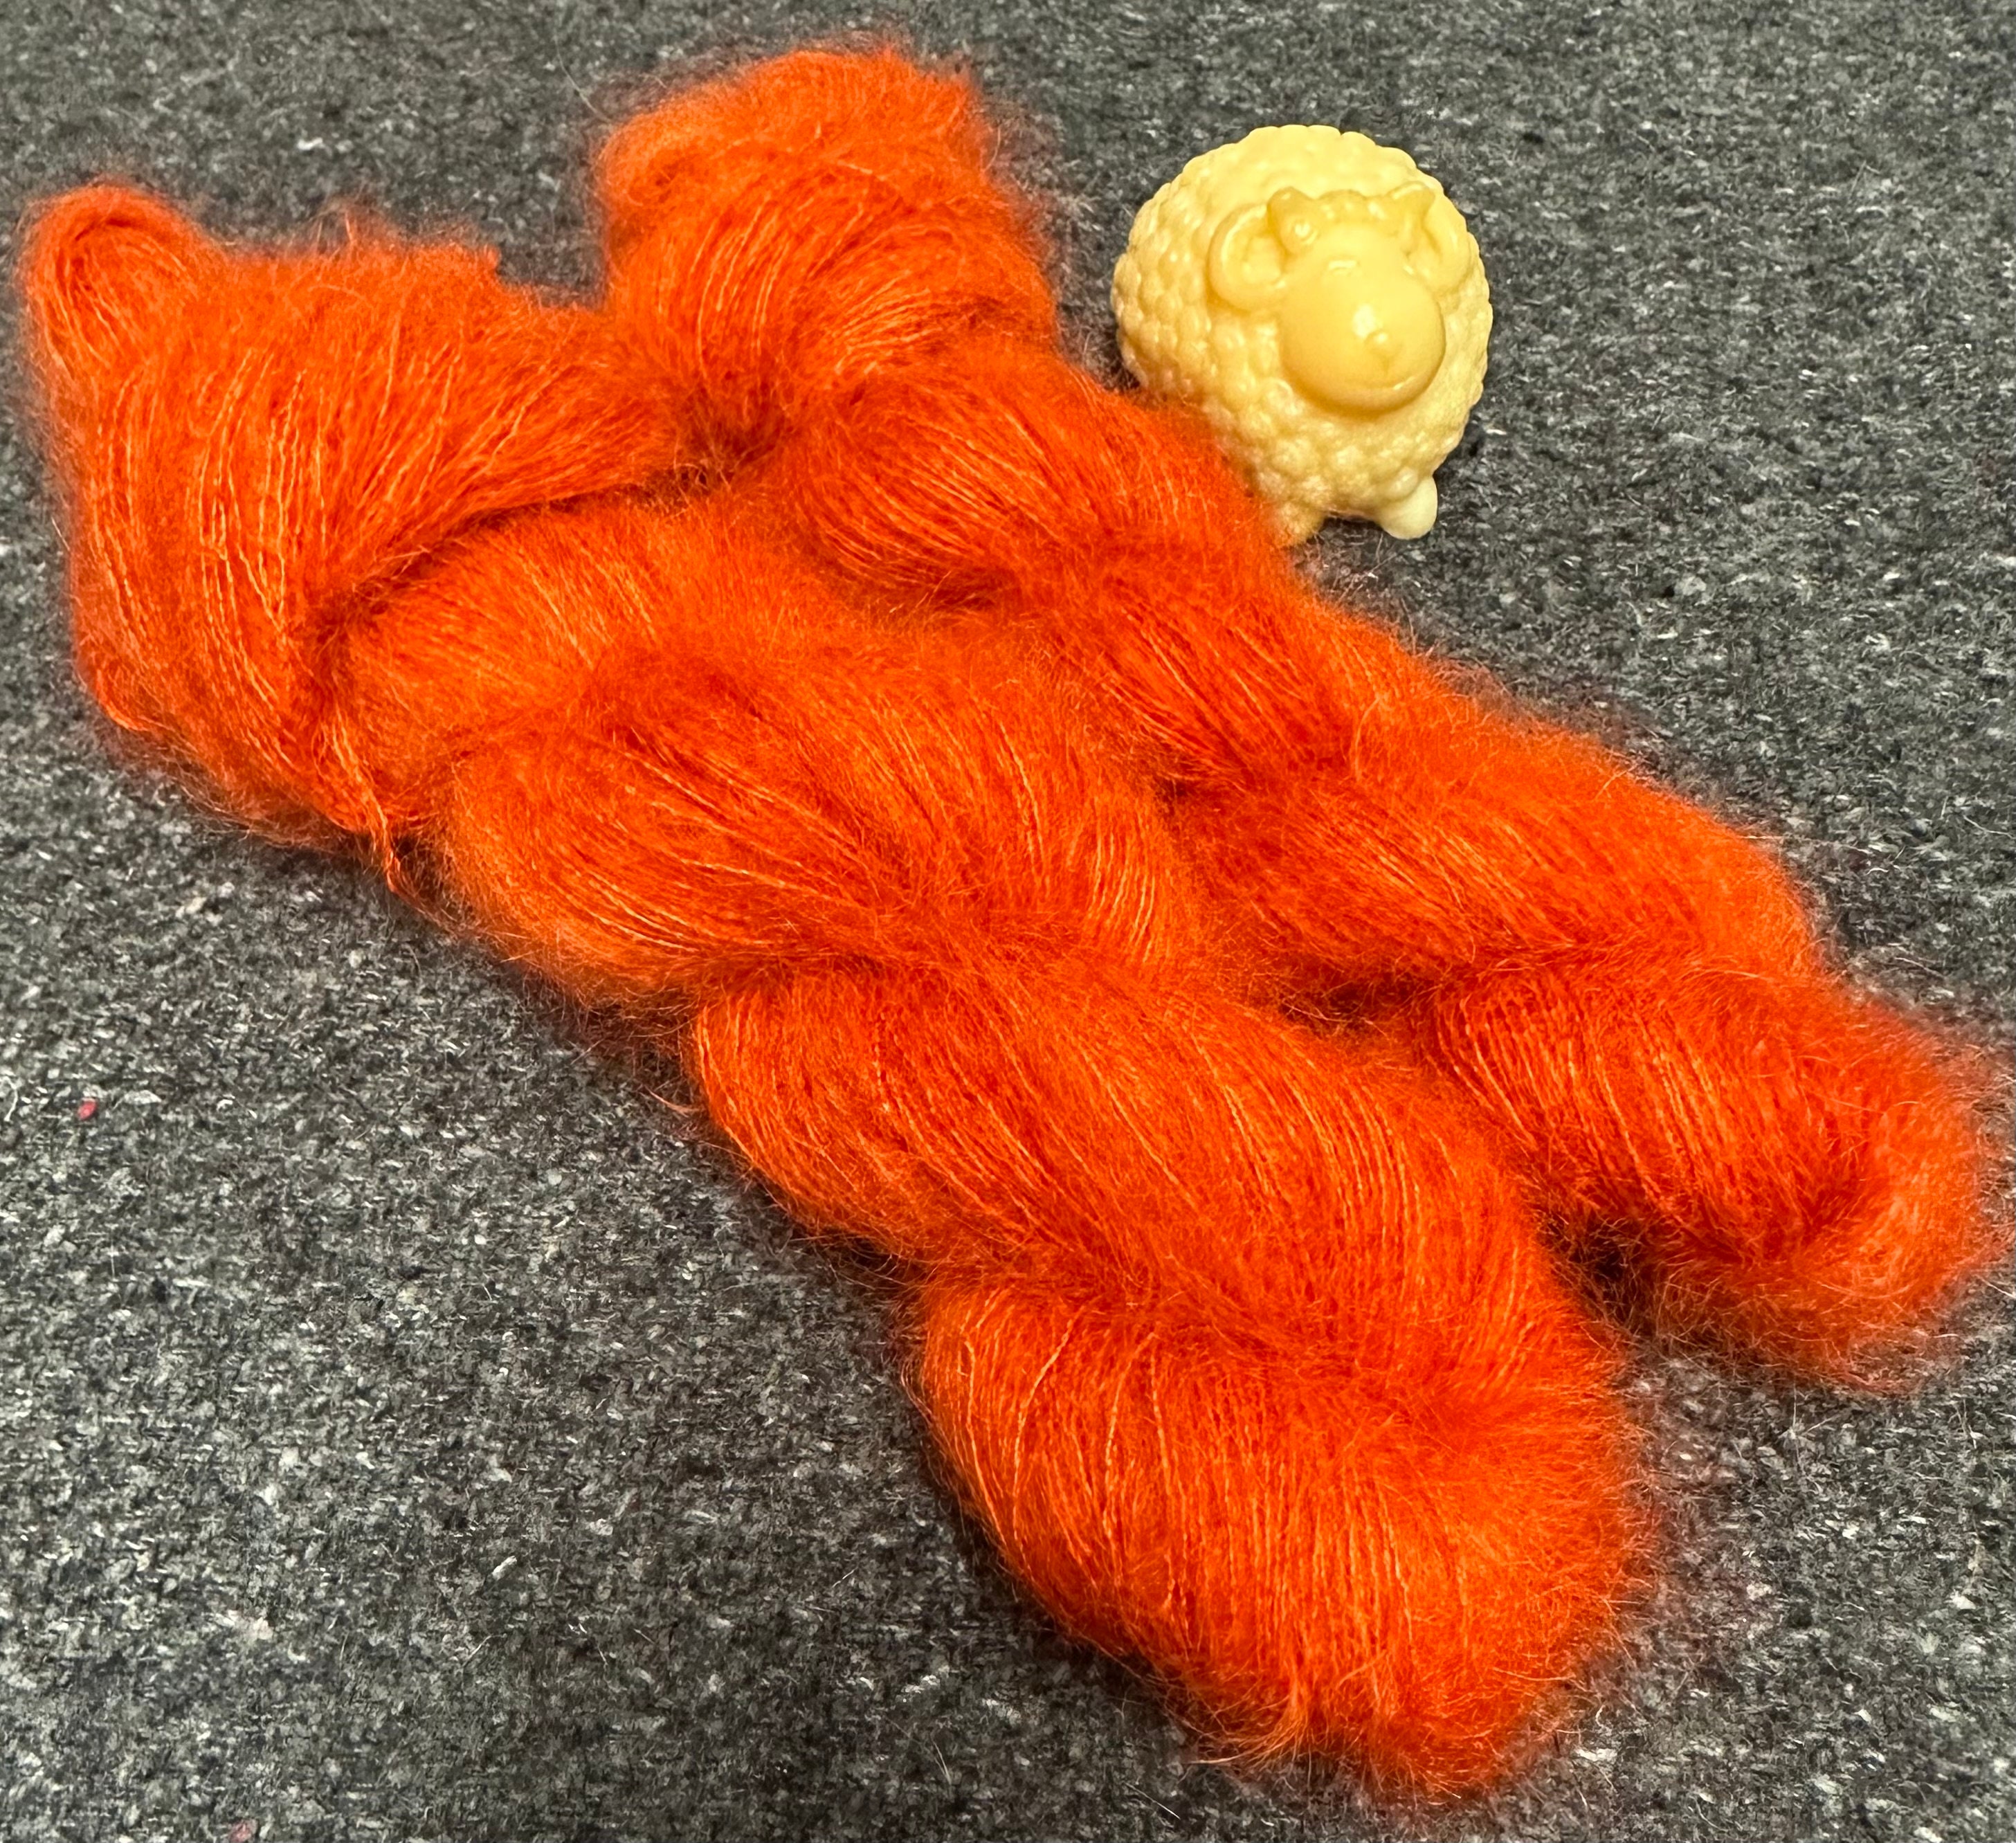 Zarela Baby Fluffy Yarn Wool 25g 13 Orange 